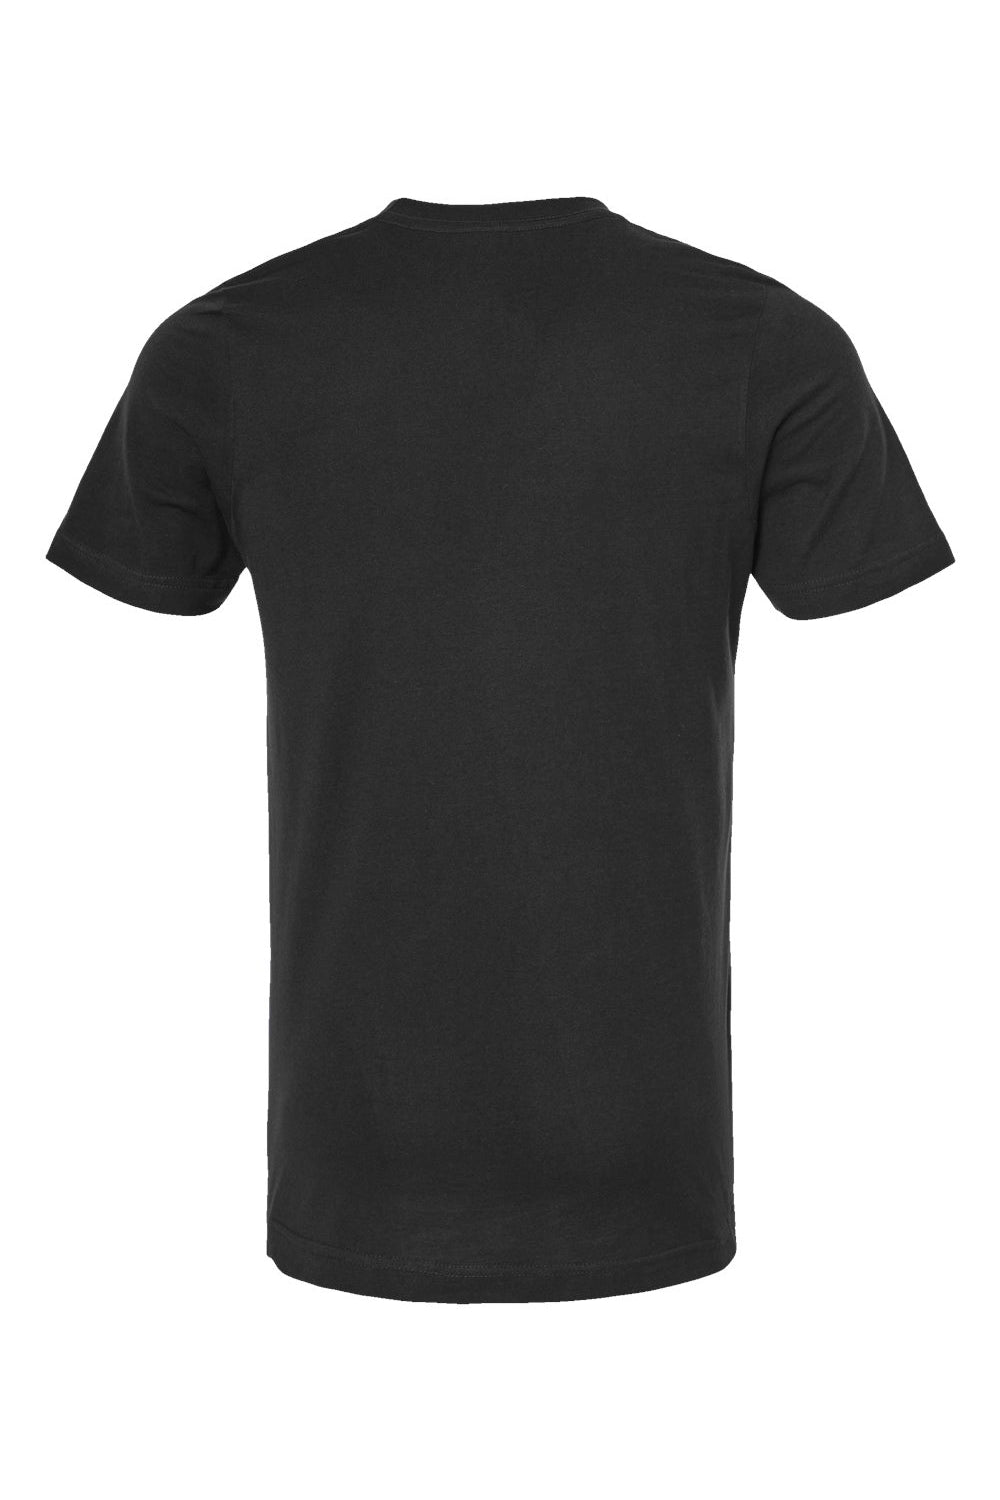 Tultex 602 Mens Short Sleeve Crewneck T-Shirt Black Flat Back